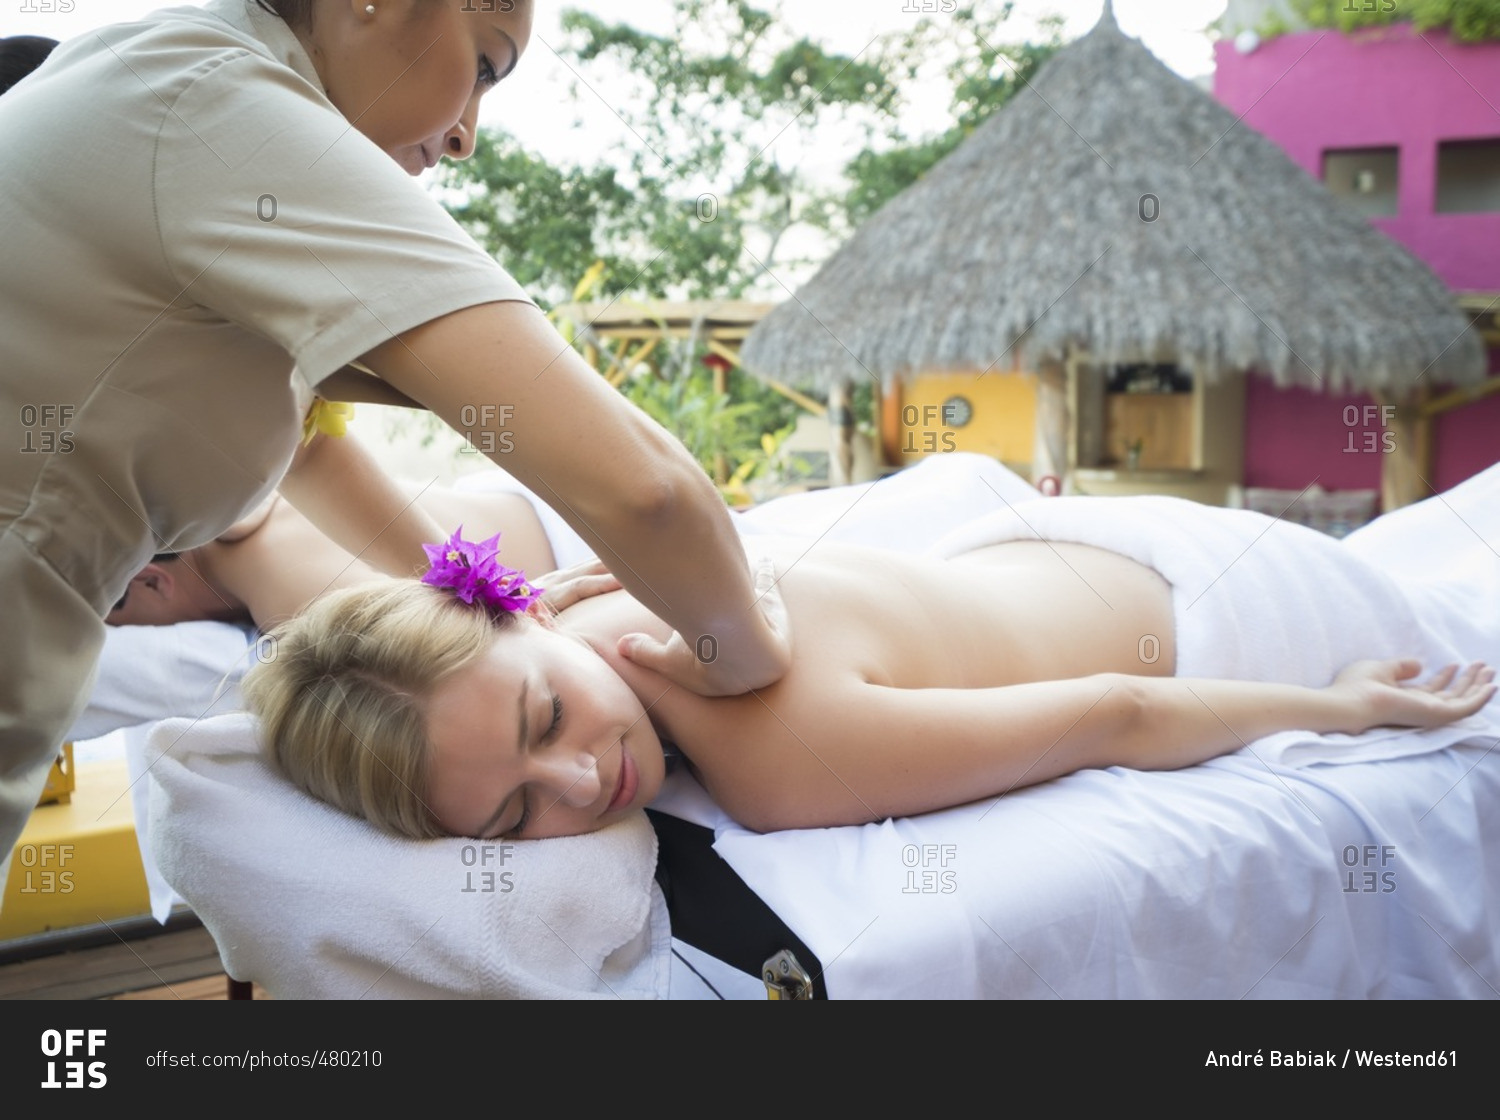 Massage at vacation resort